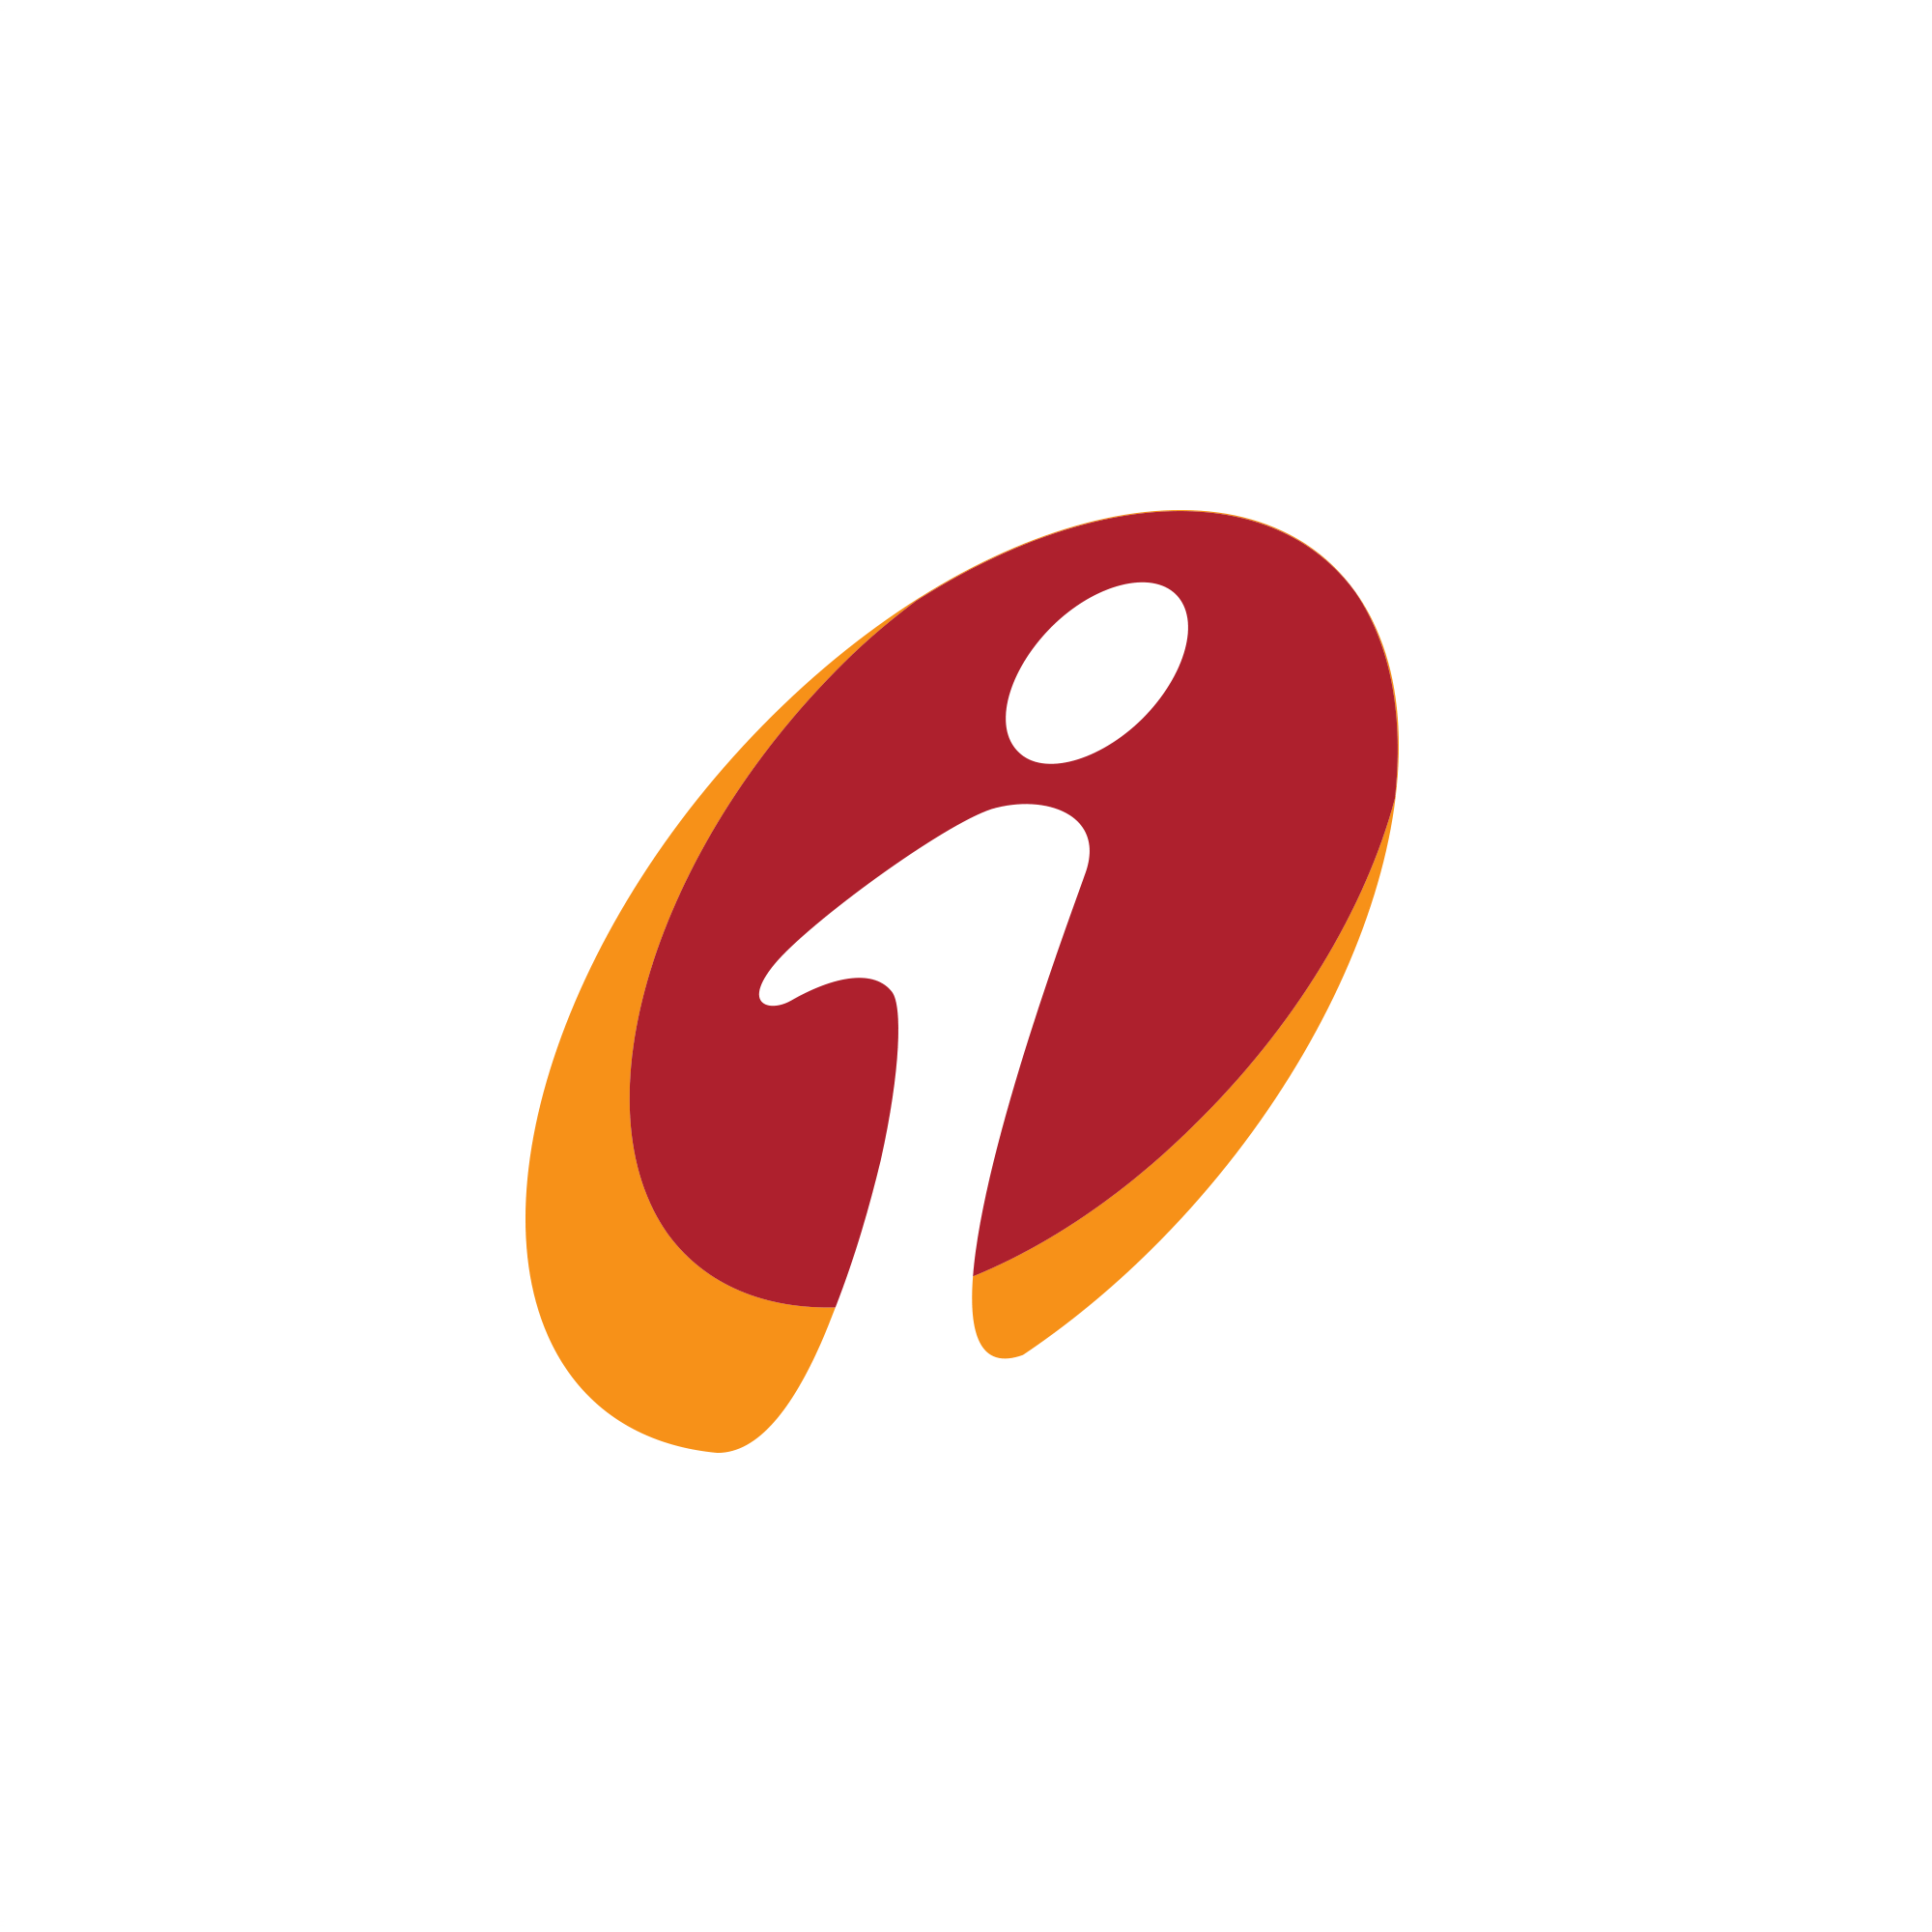 ICICI Bank Logo - ICICI Bank Logo | Real Company ...